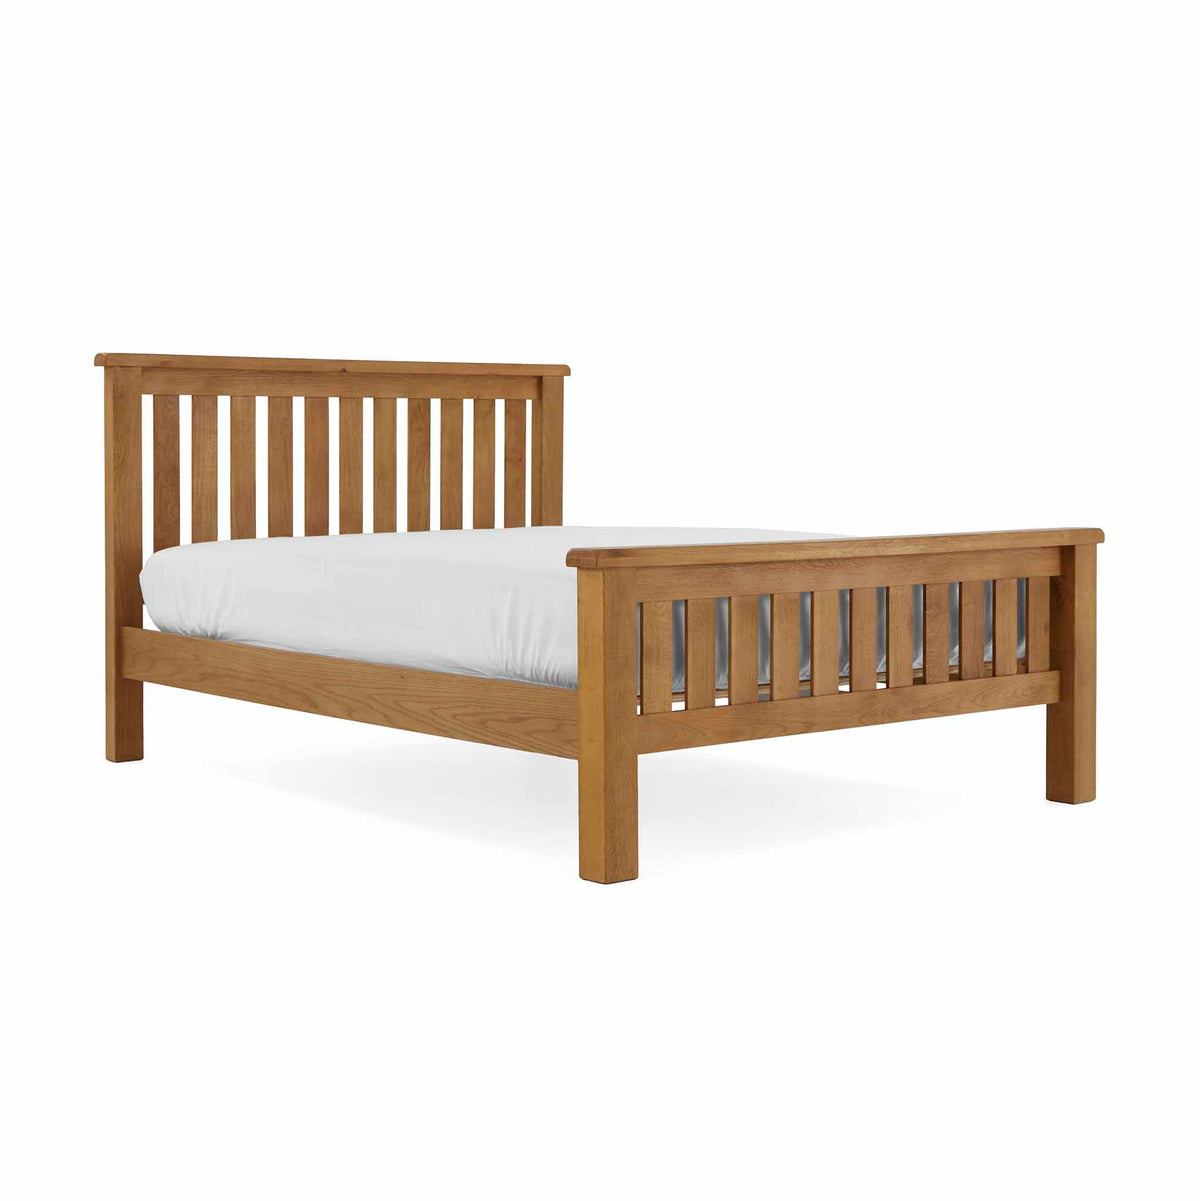 Zelah Oak 5ft Slatted Bed Frame from Roseland Furniture